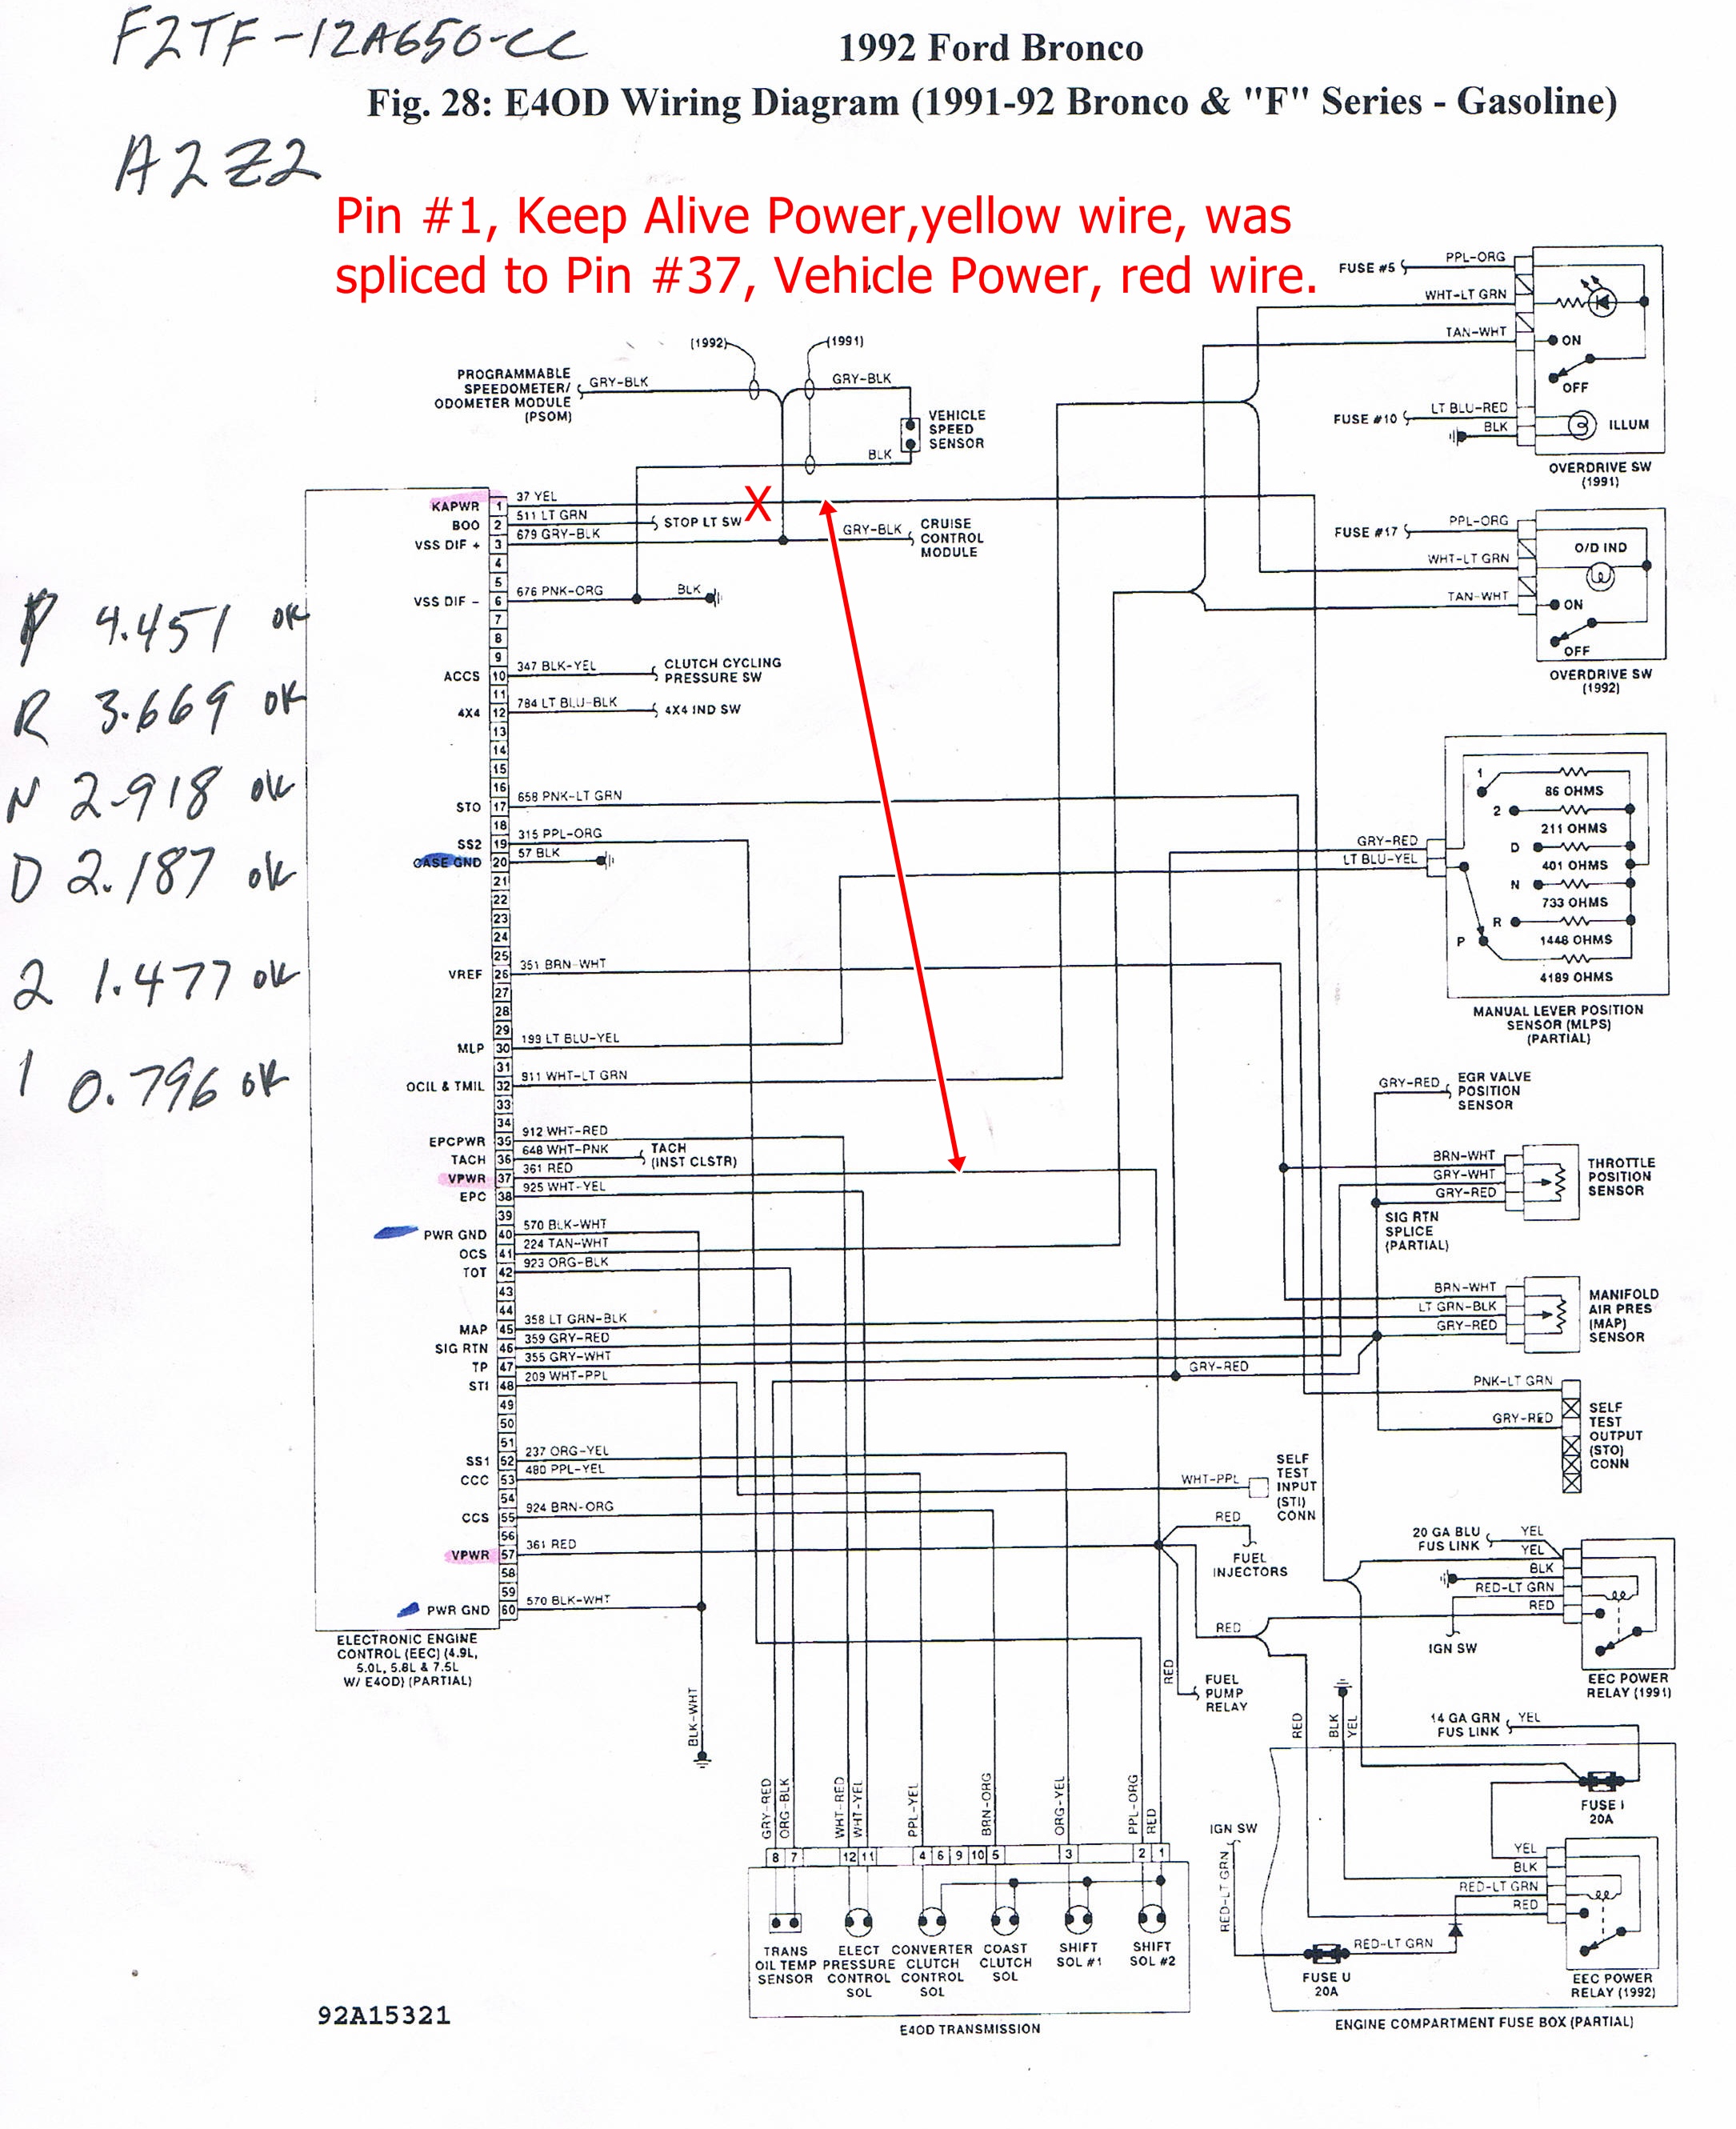 Chrysler control module powertrain #3